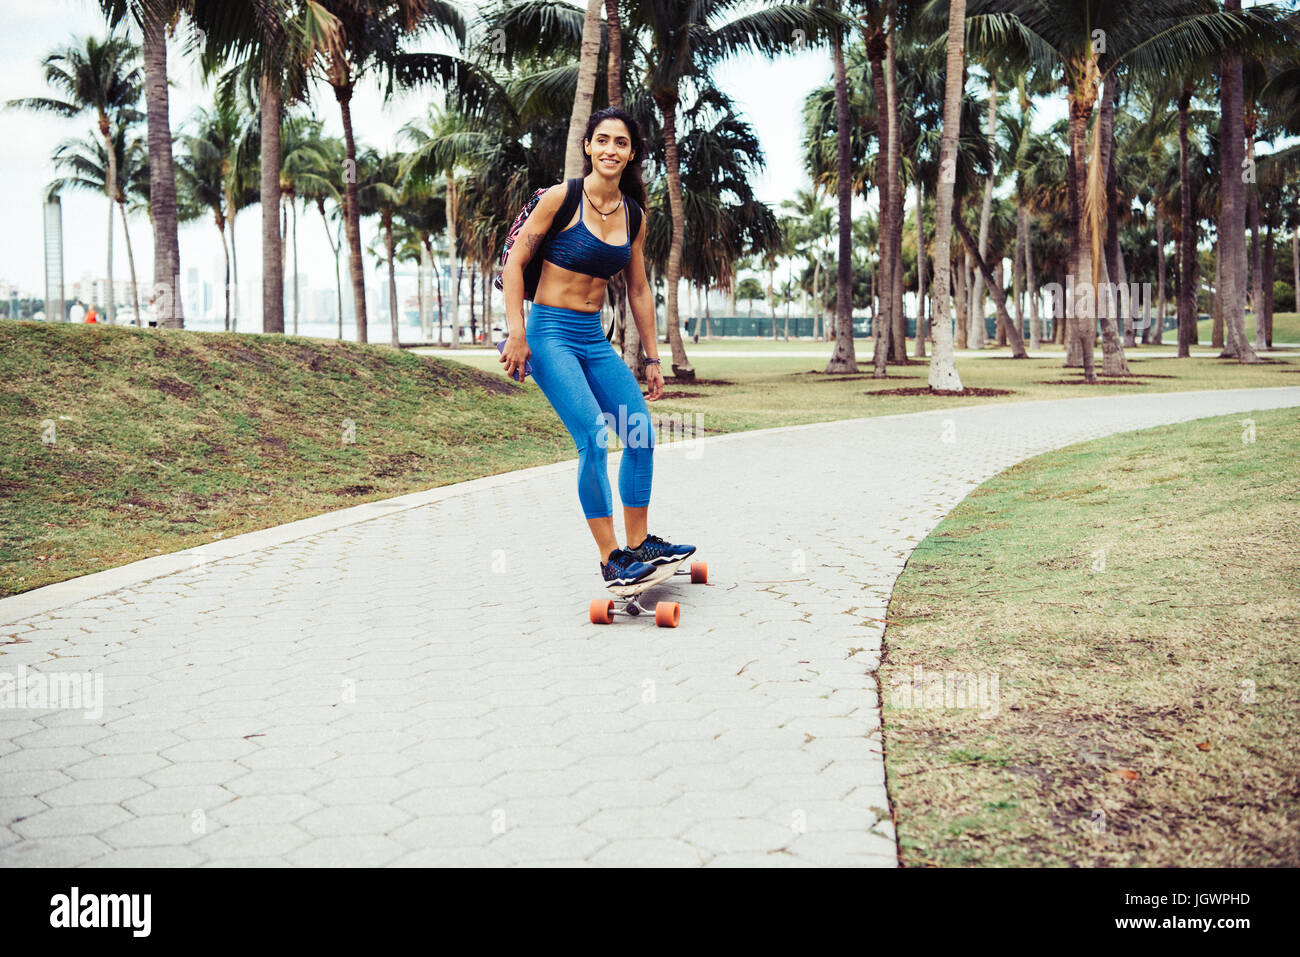 Young woman skateboarding through park, smiling, South Point Park, Miami Beach, Florida, USA Stock Photo